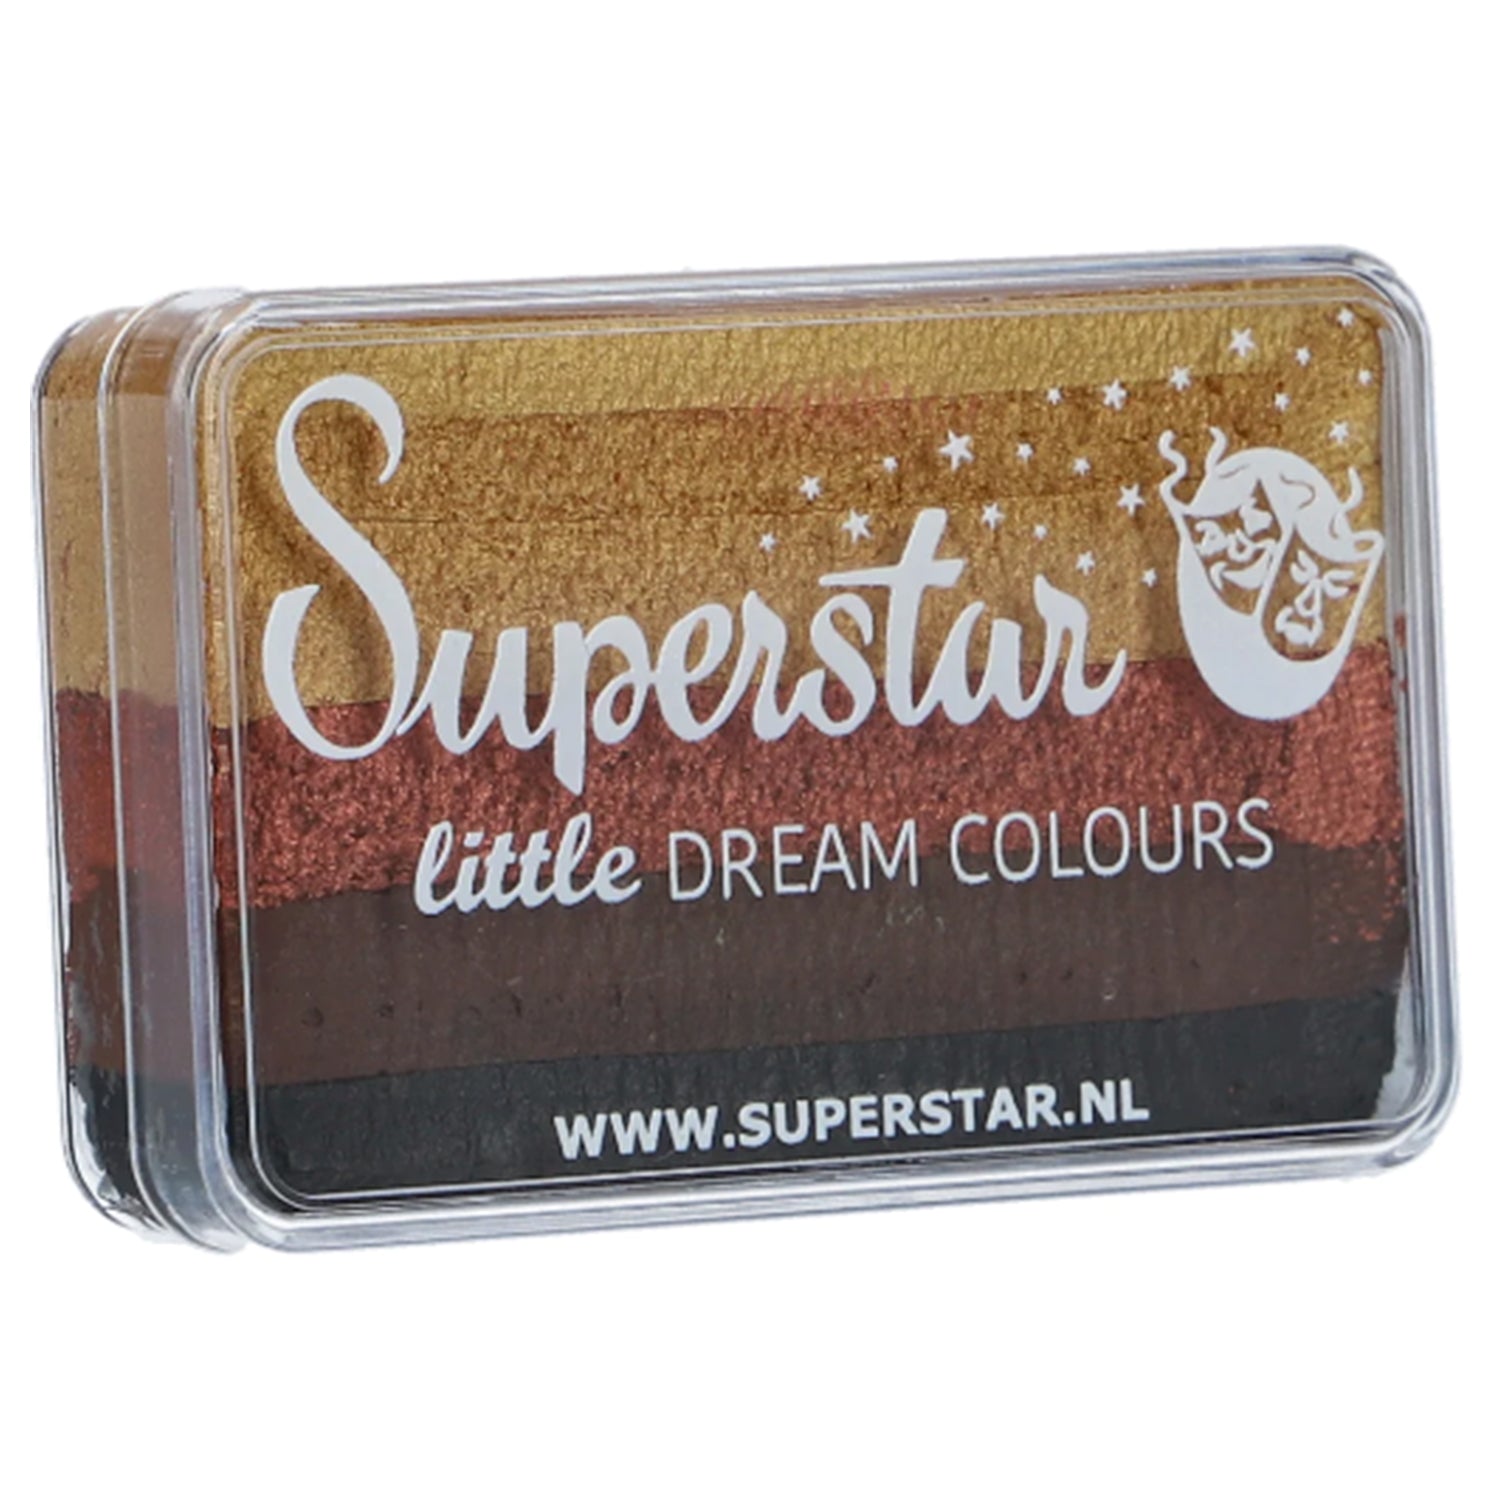 Superstar Little Dream Colours Rainbow Cake  - Little Safari (30 gm)